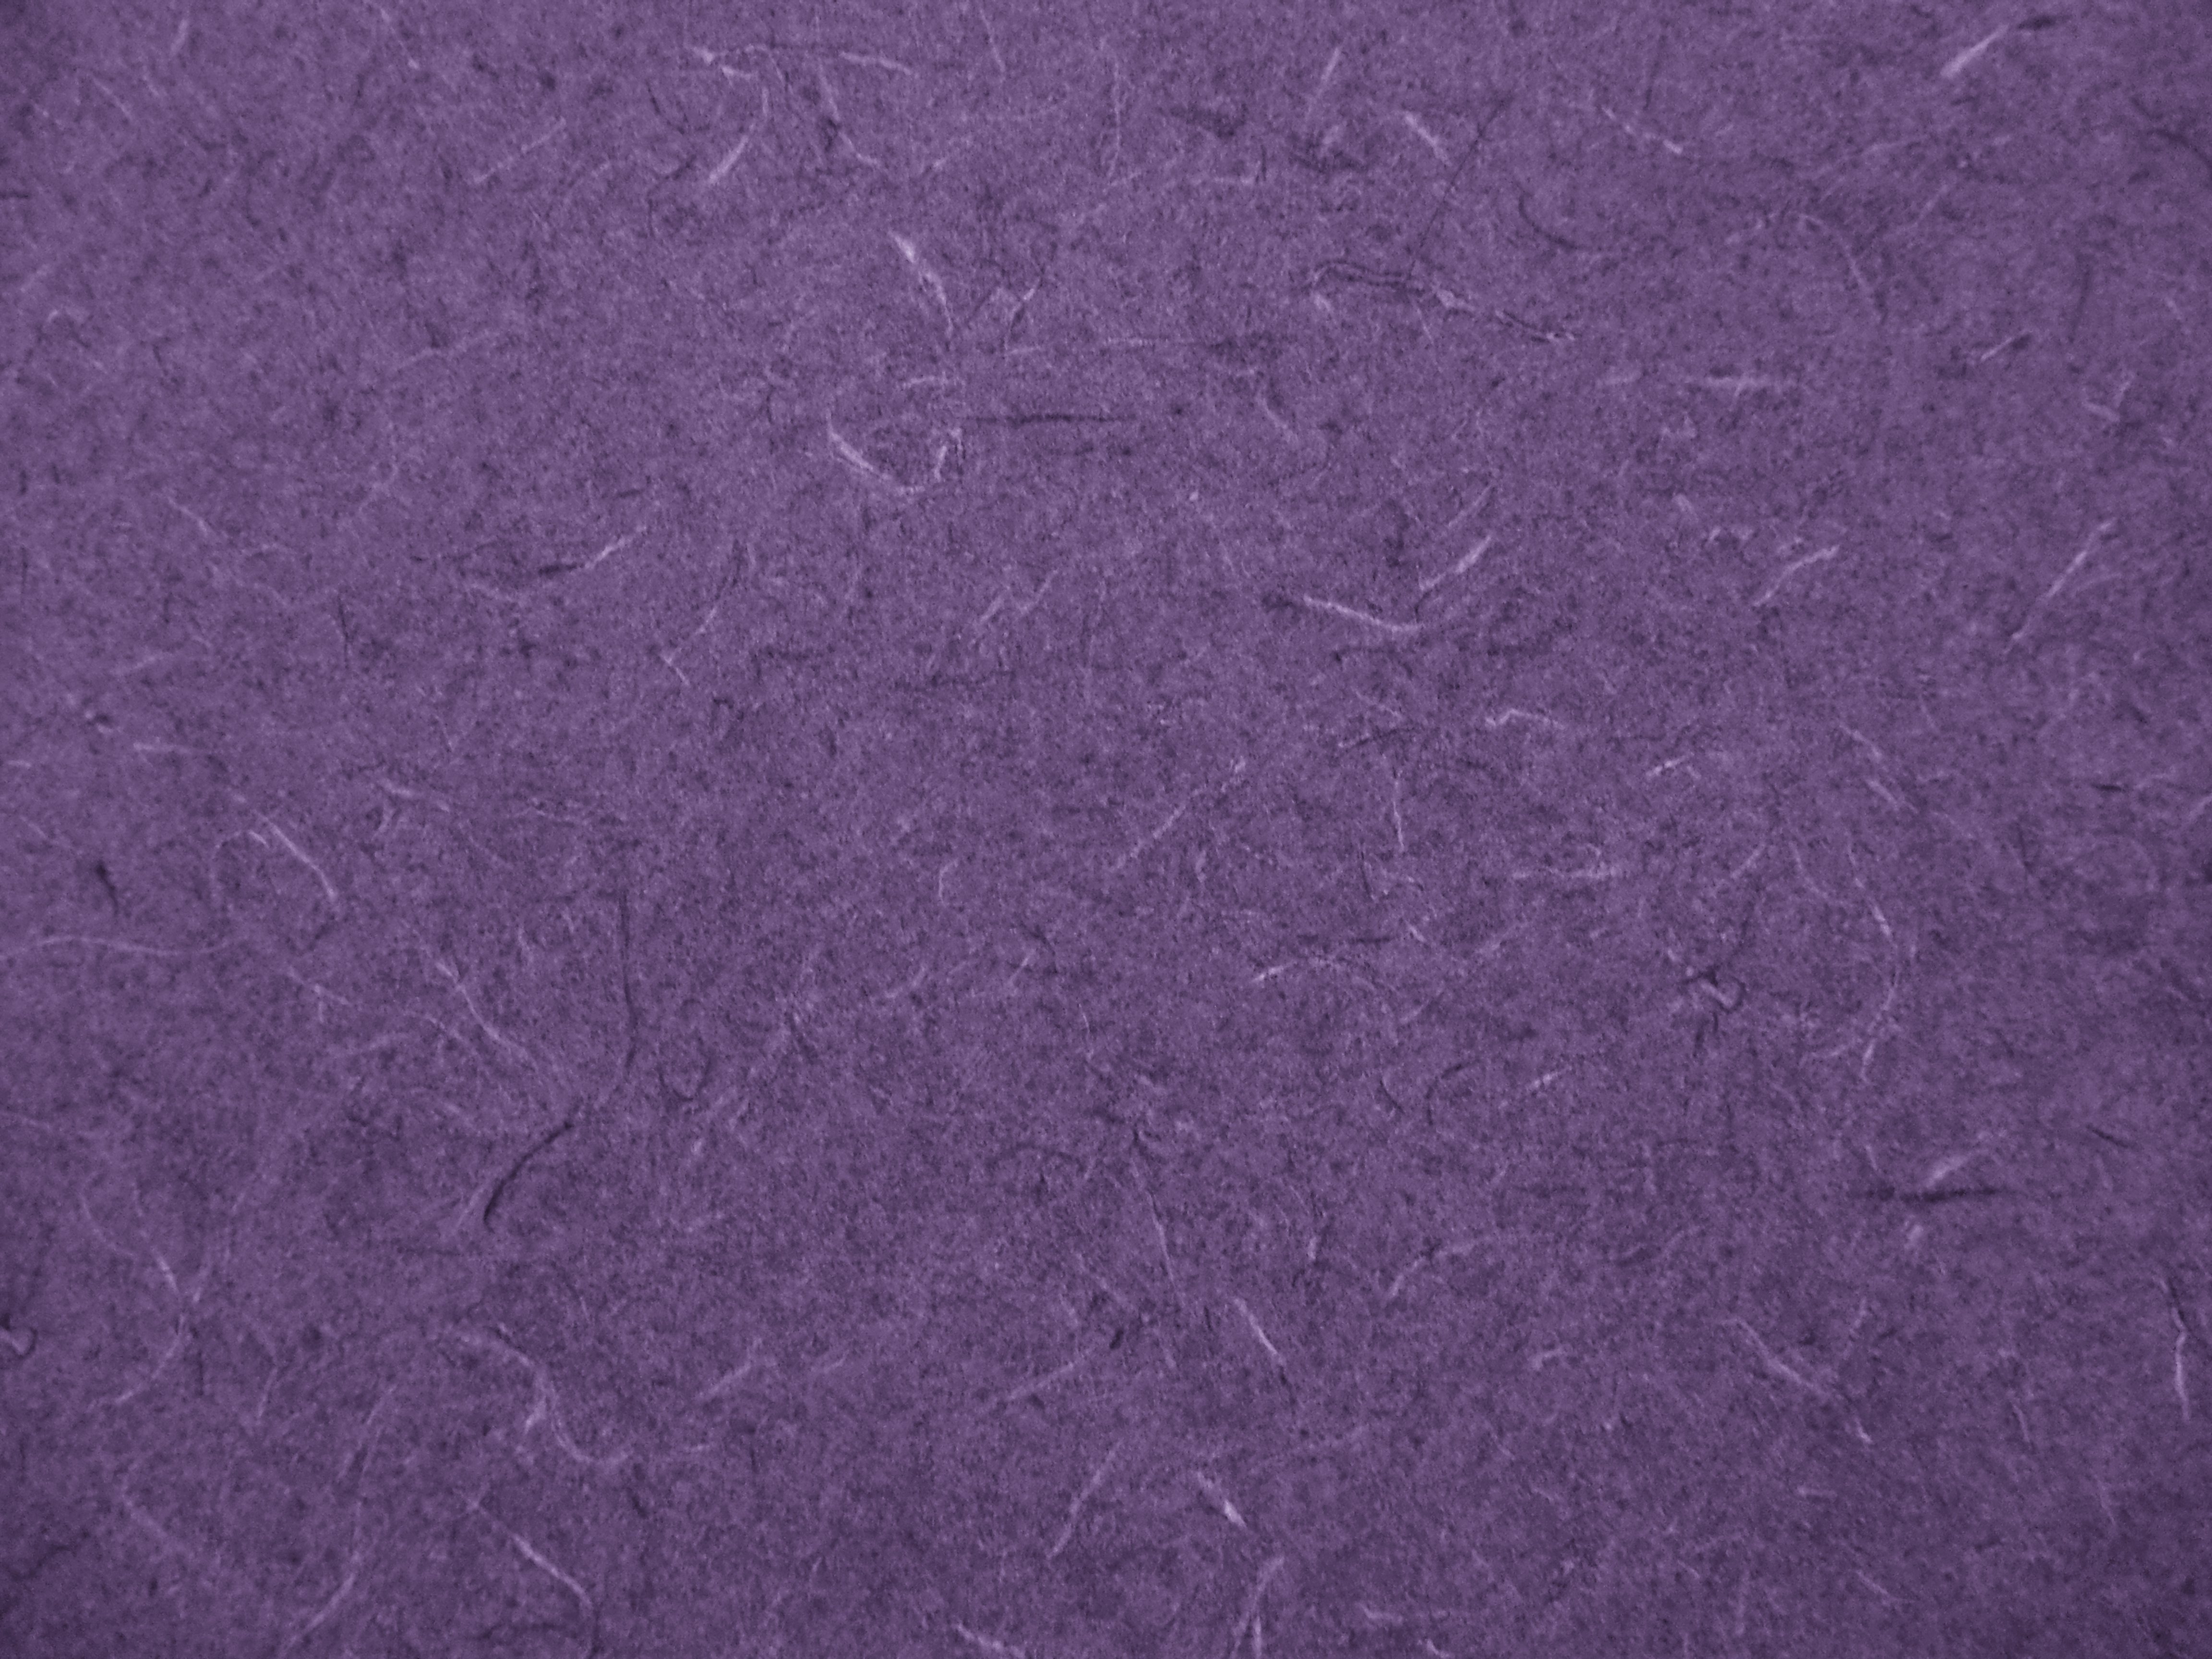 https://www.photos-public-domain.com/wp-content/uploads/2013/01/dusty-purple-abstract-pattern-laminate-counterop-texture.jpg